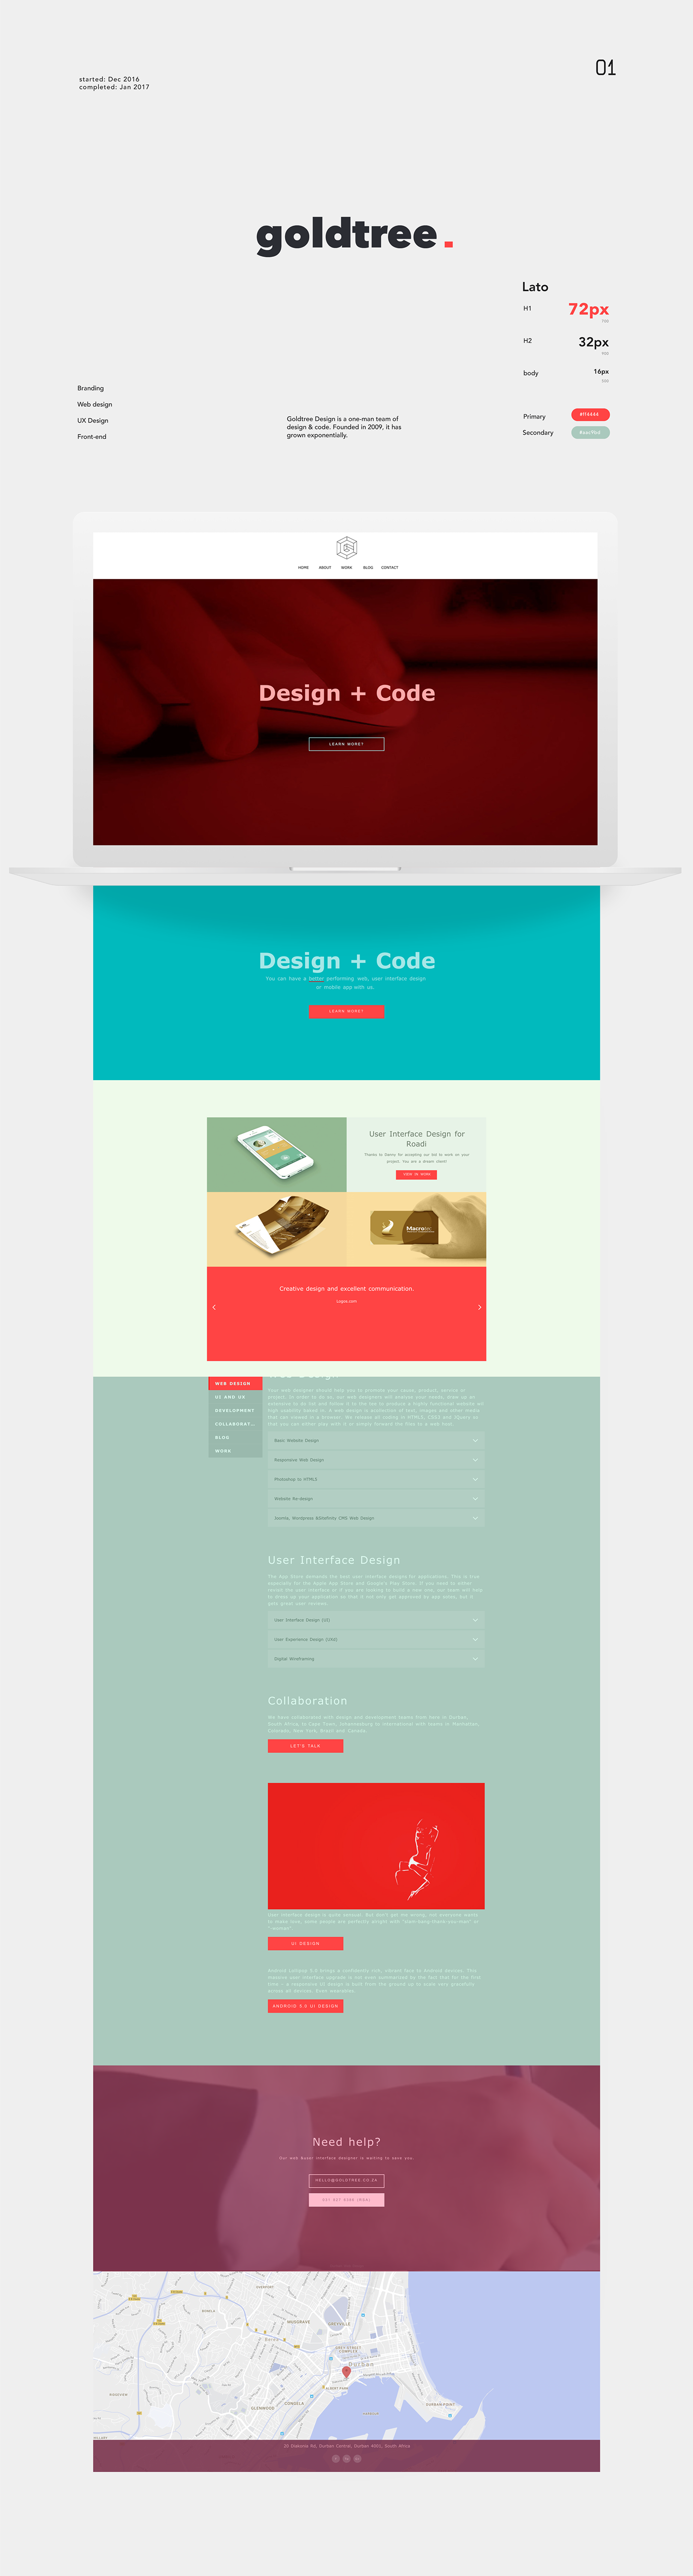 Web Design  UX design wireframing art direction  Interaction design  stylesheets landing page design